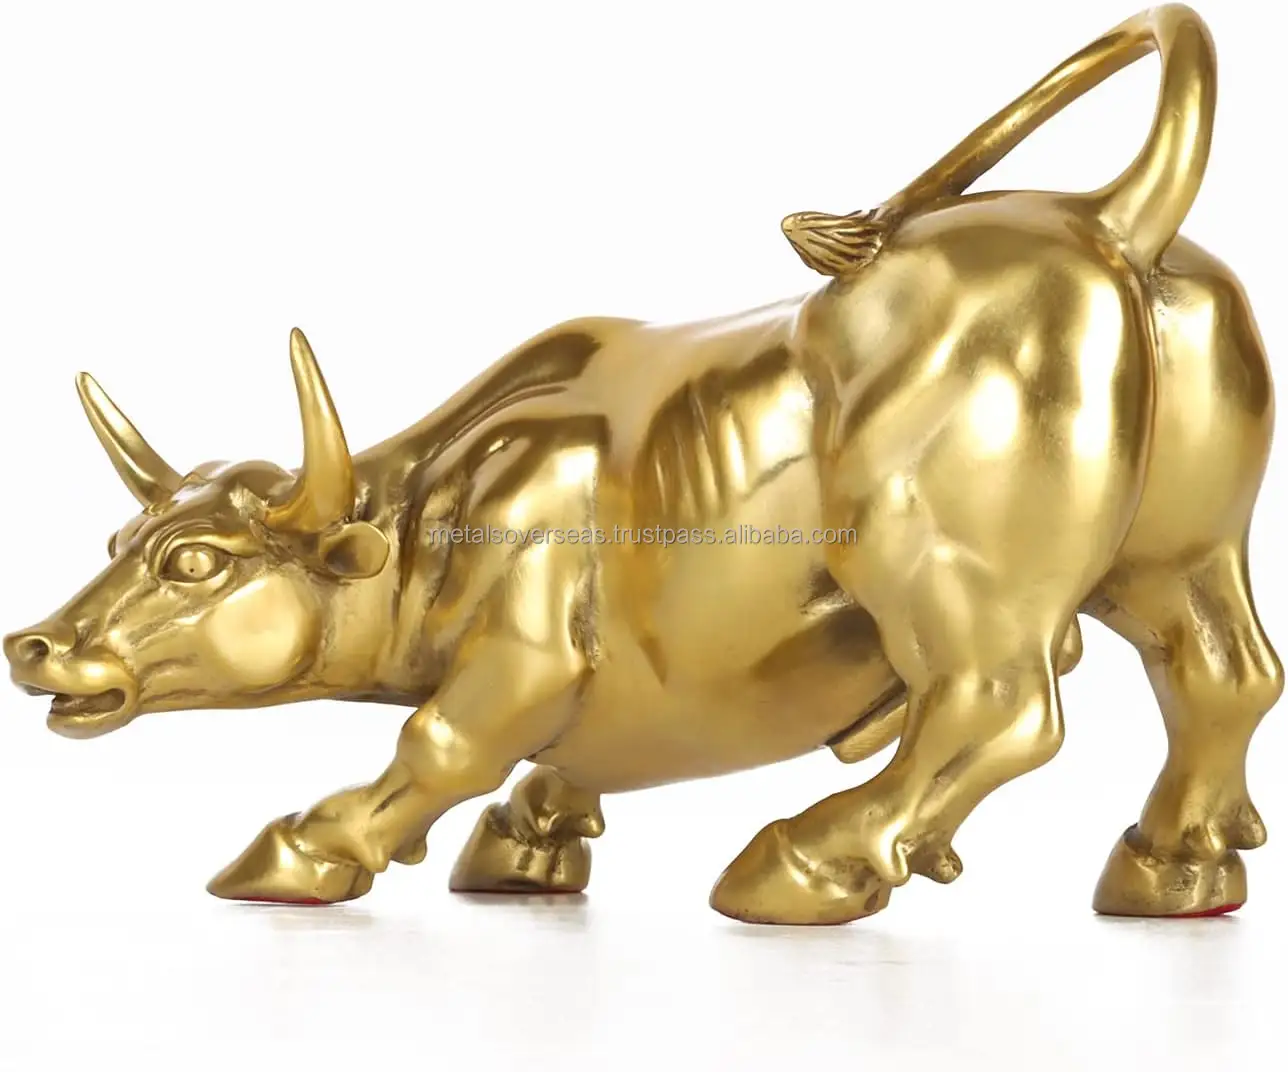 industrial factory sale 7.8" L Gold Brass Wall Street Bull Statue Sculpture Stock Market Charging Bull Art Office Decor Gift